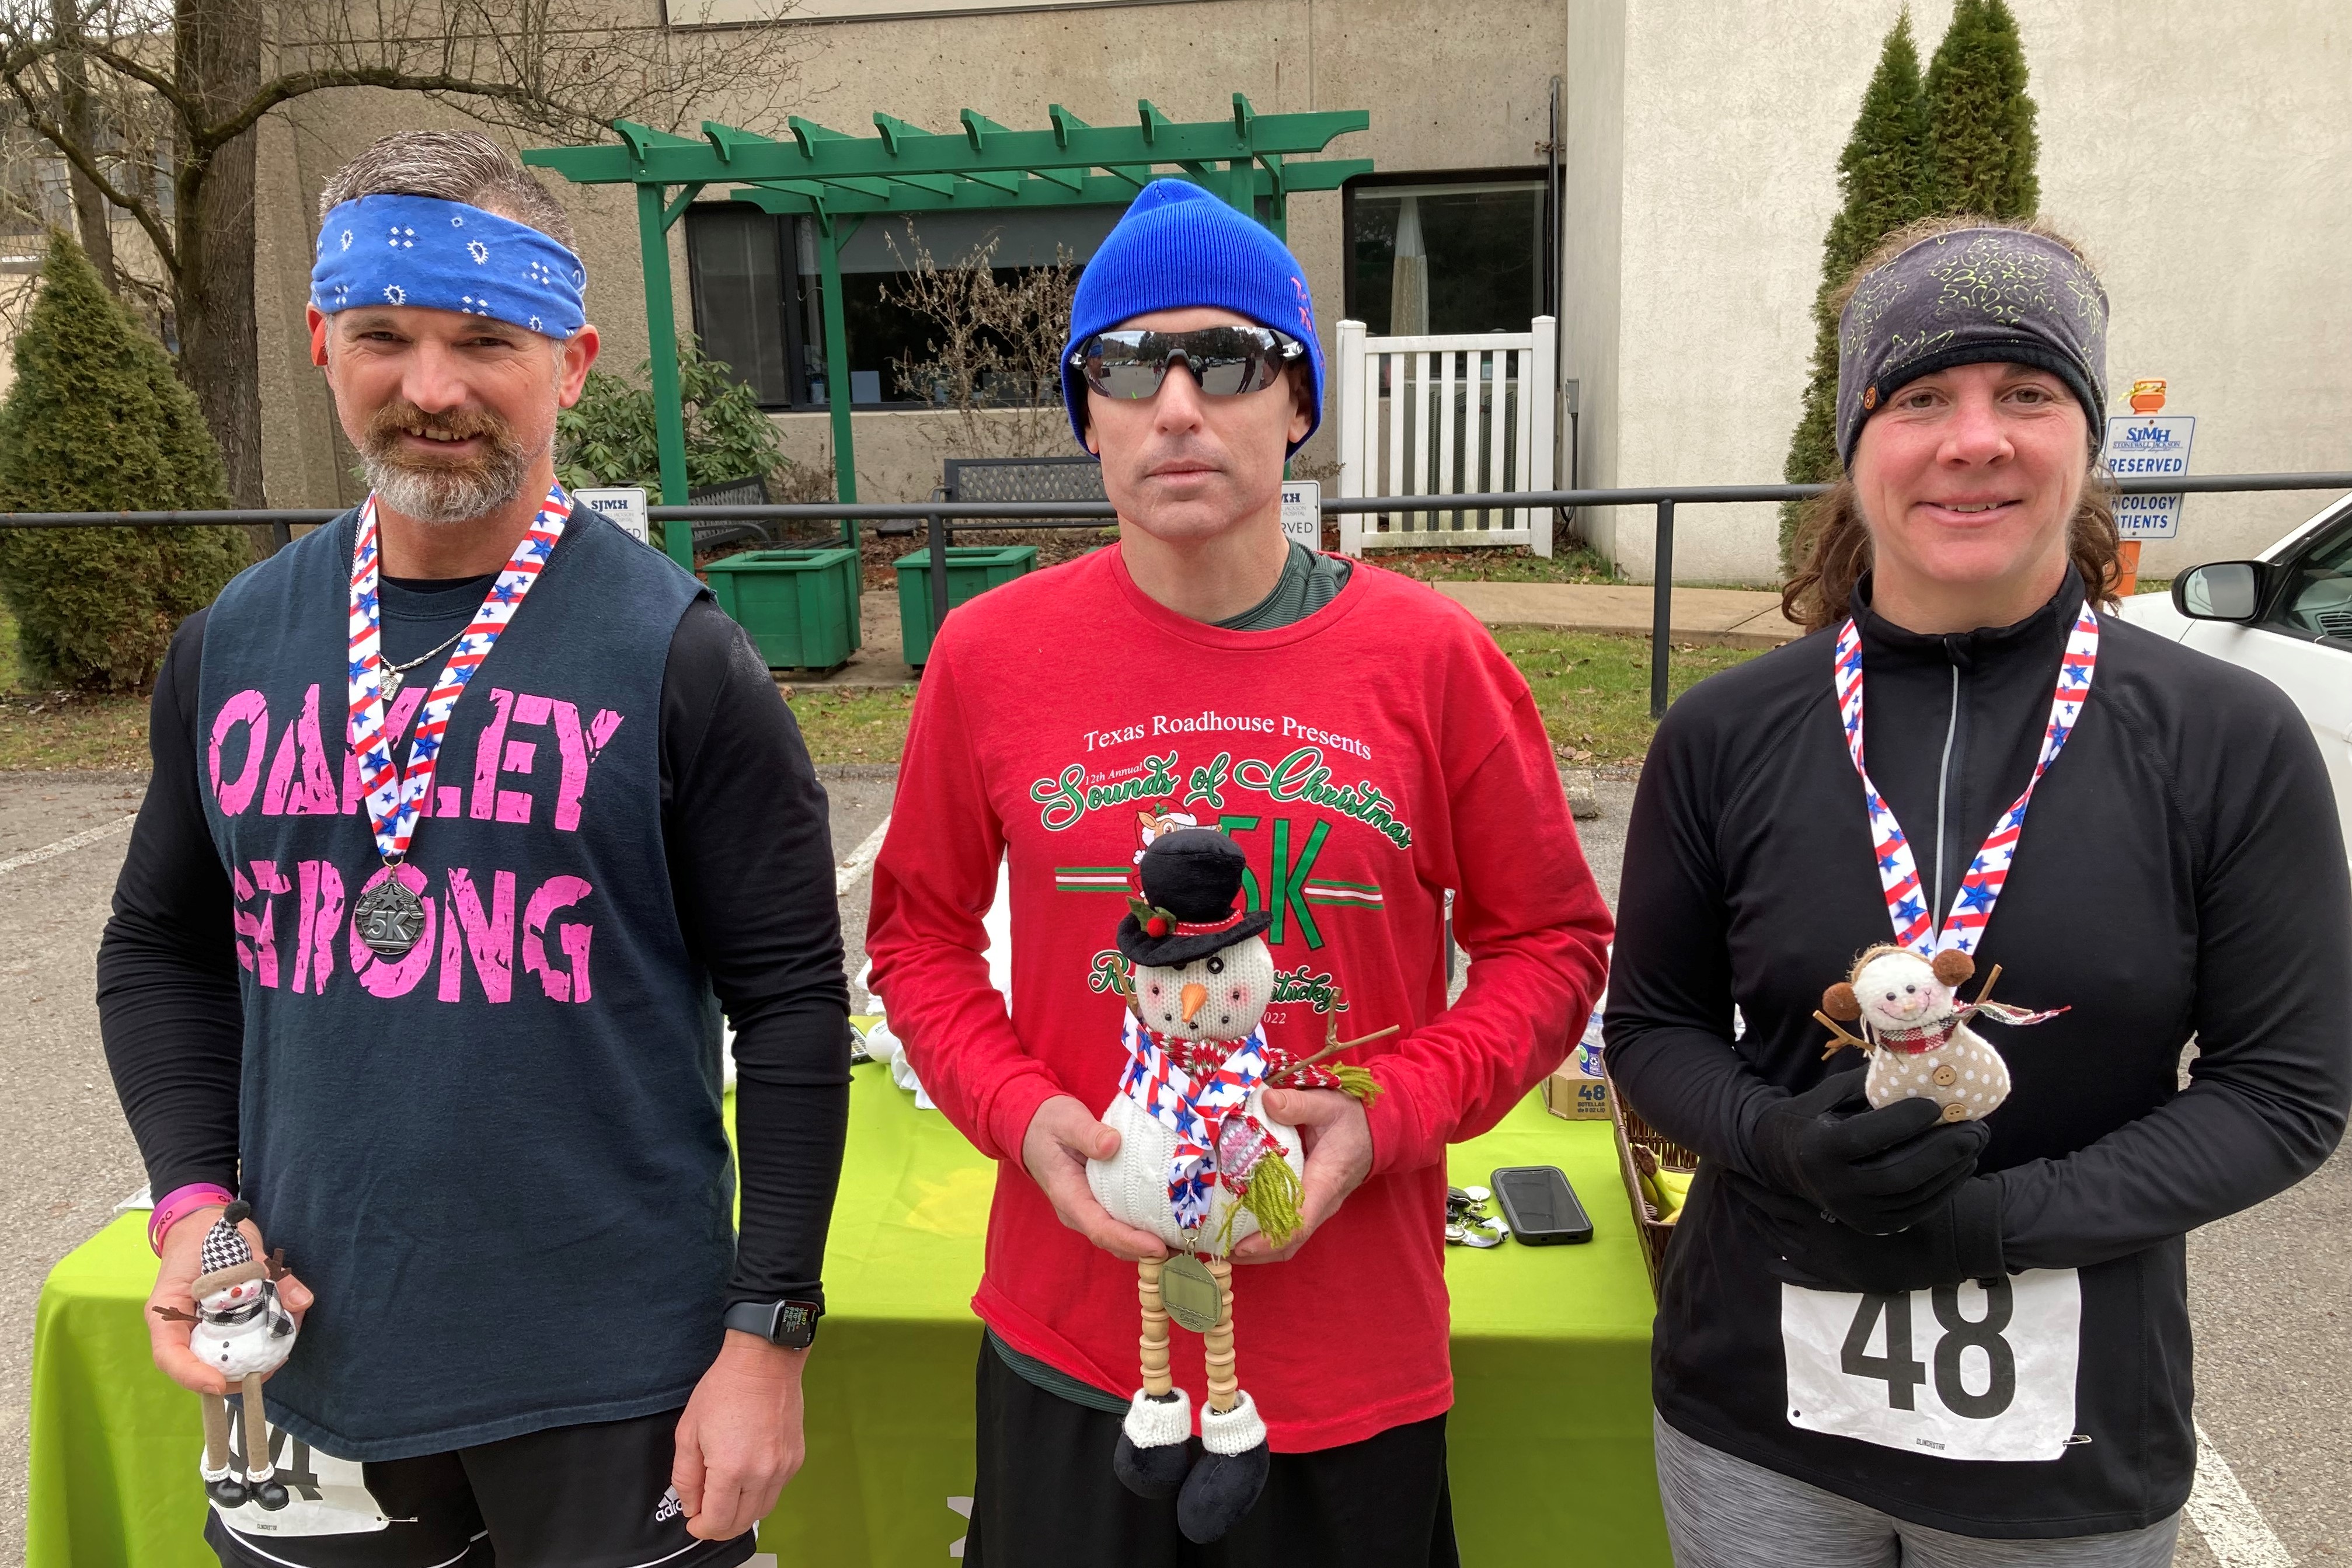 Mon Health Stonewall Jackson Memorial Hospital Snowball Run Winners Announced; Ground Hog Day Run on February 4